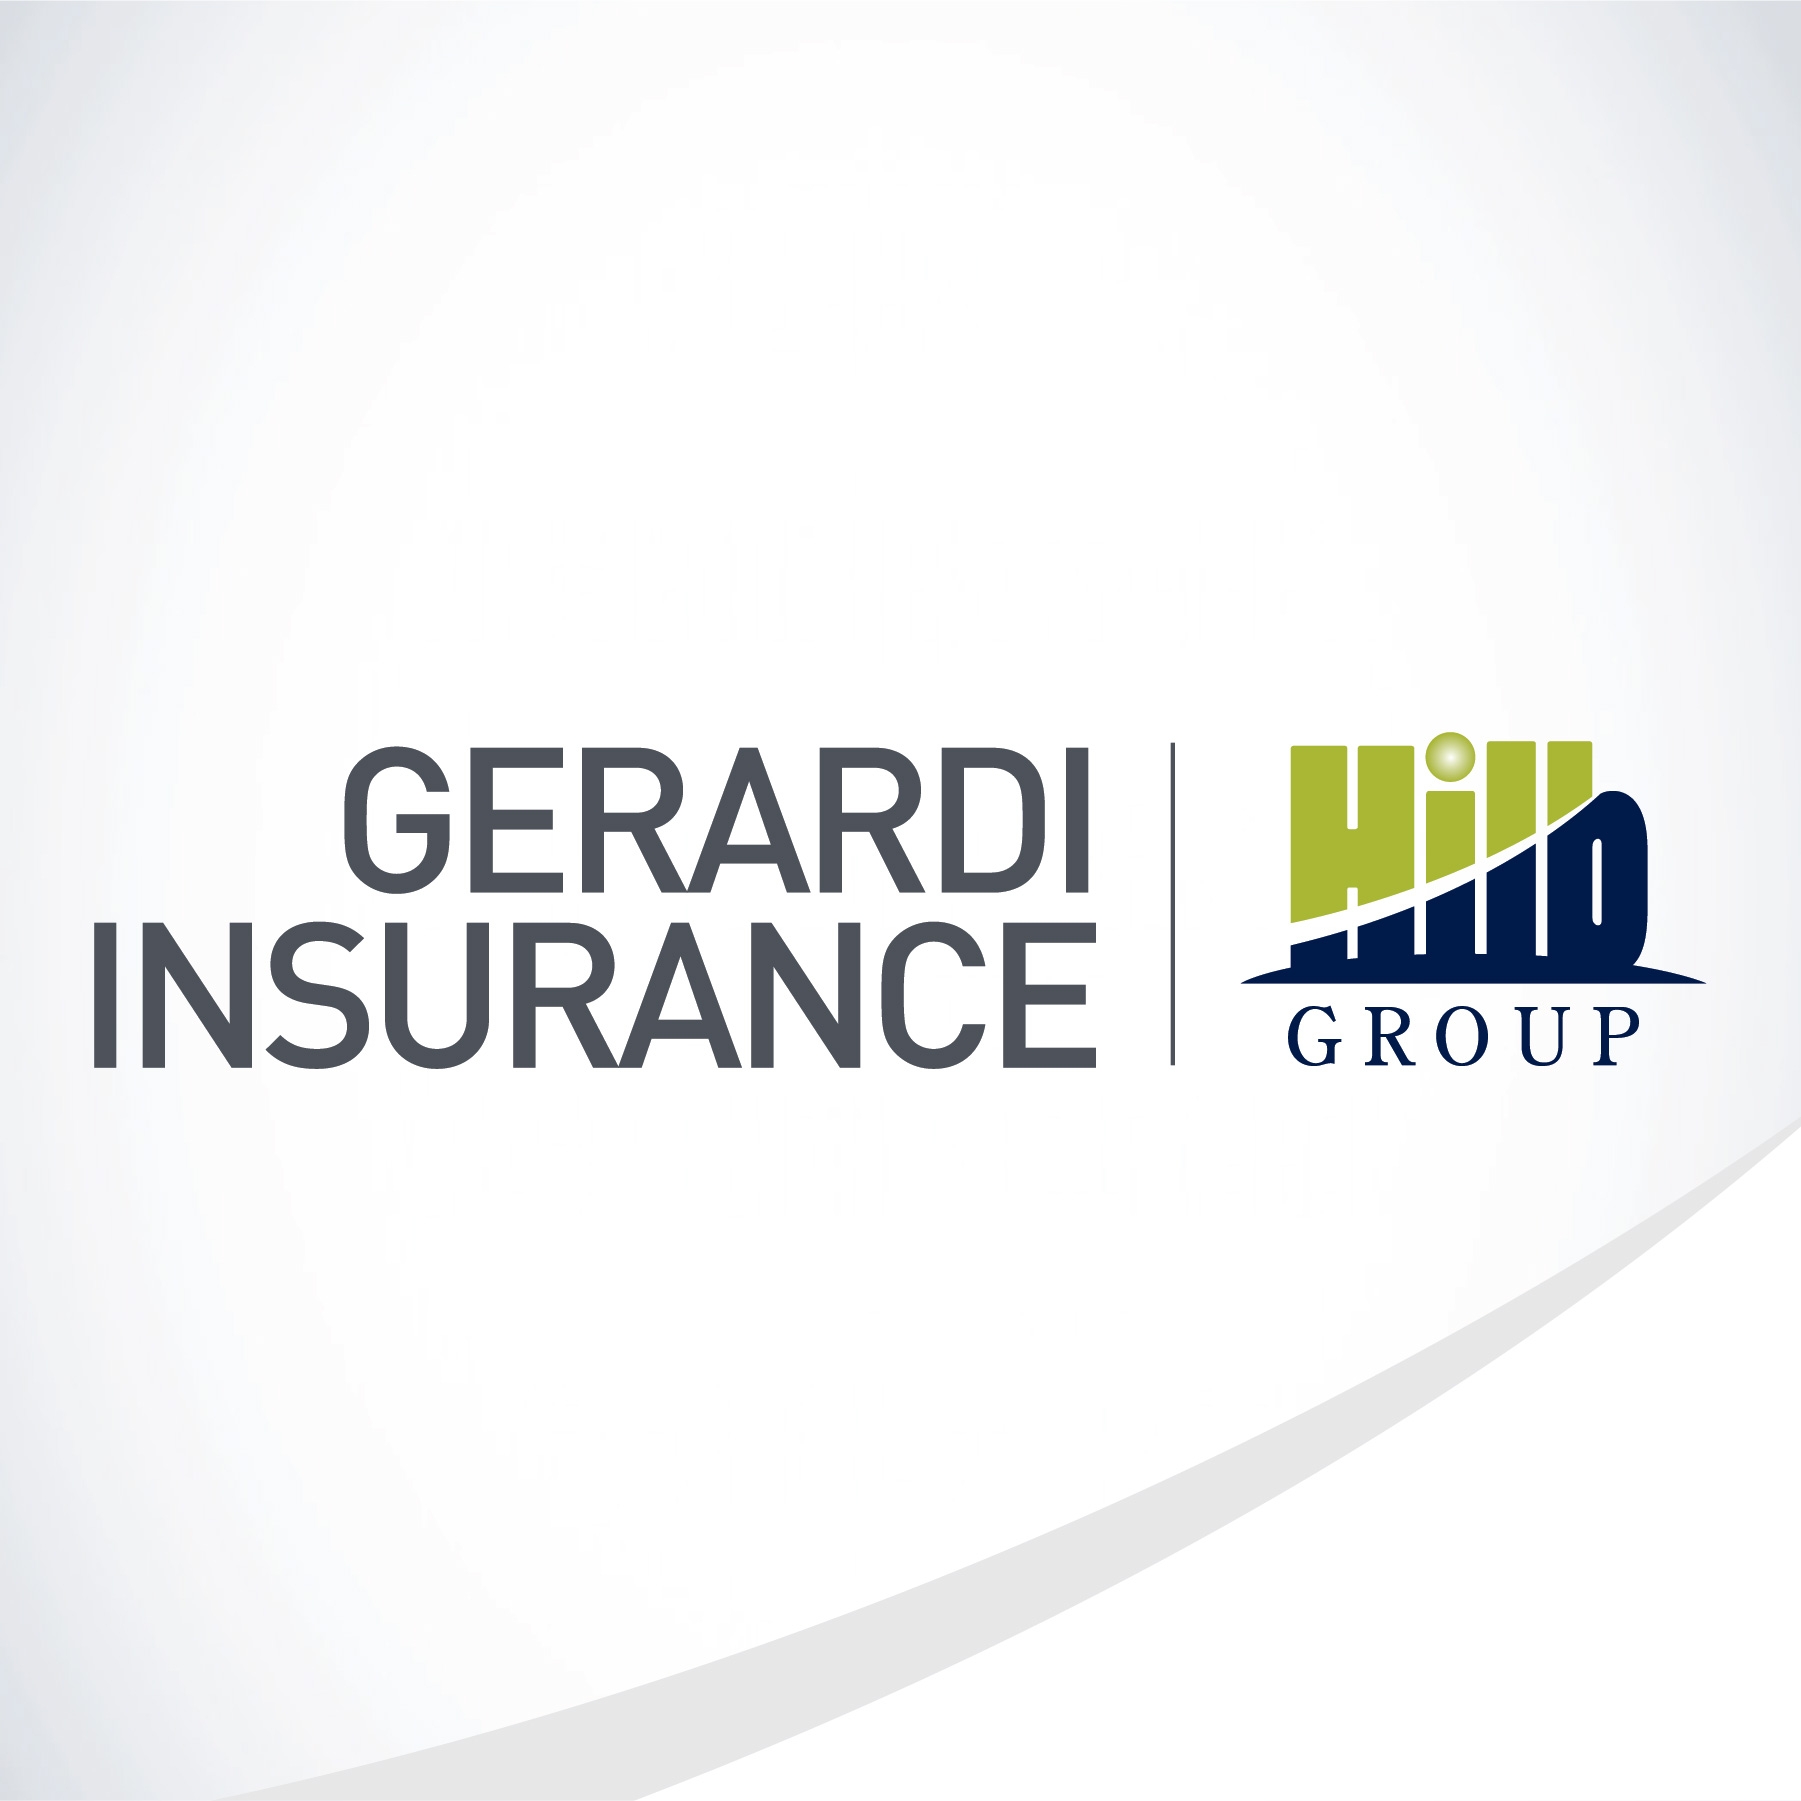 Gerardi Insurance Services